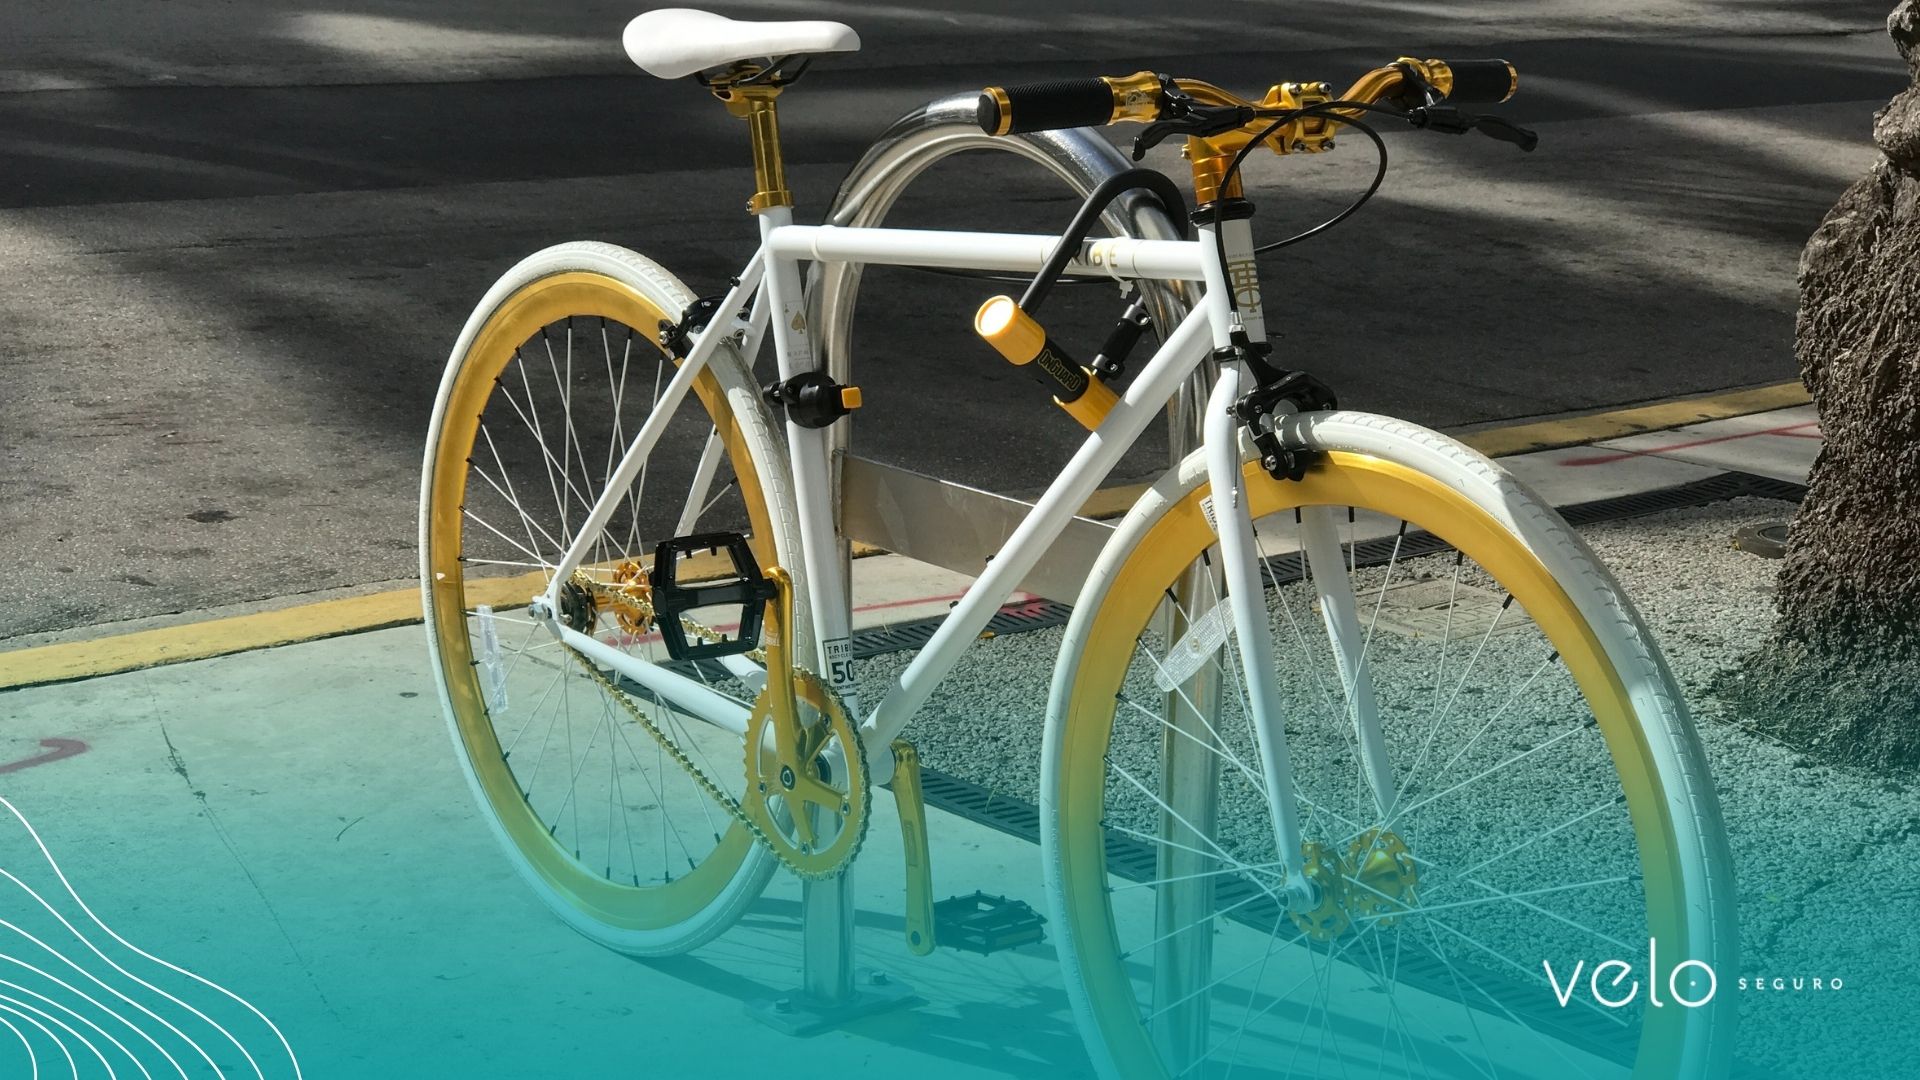 cobertura seguro de bike furto